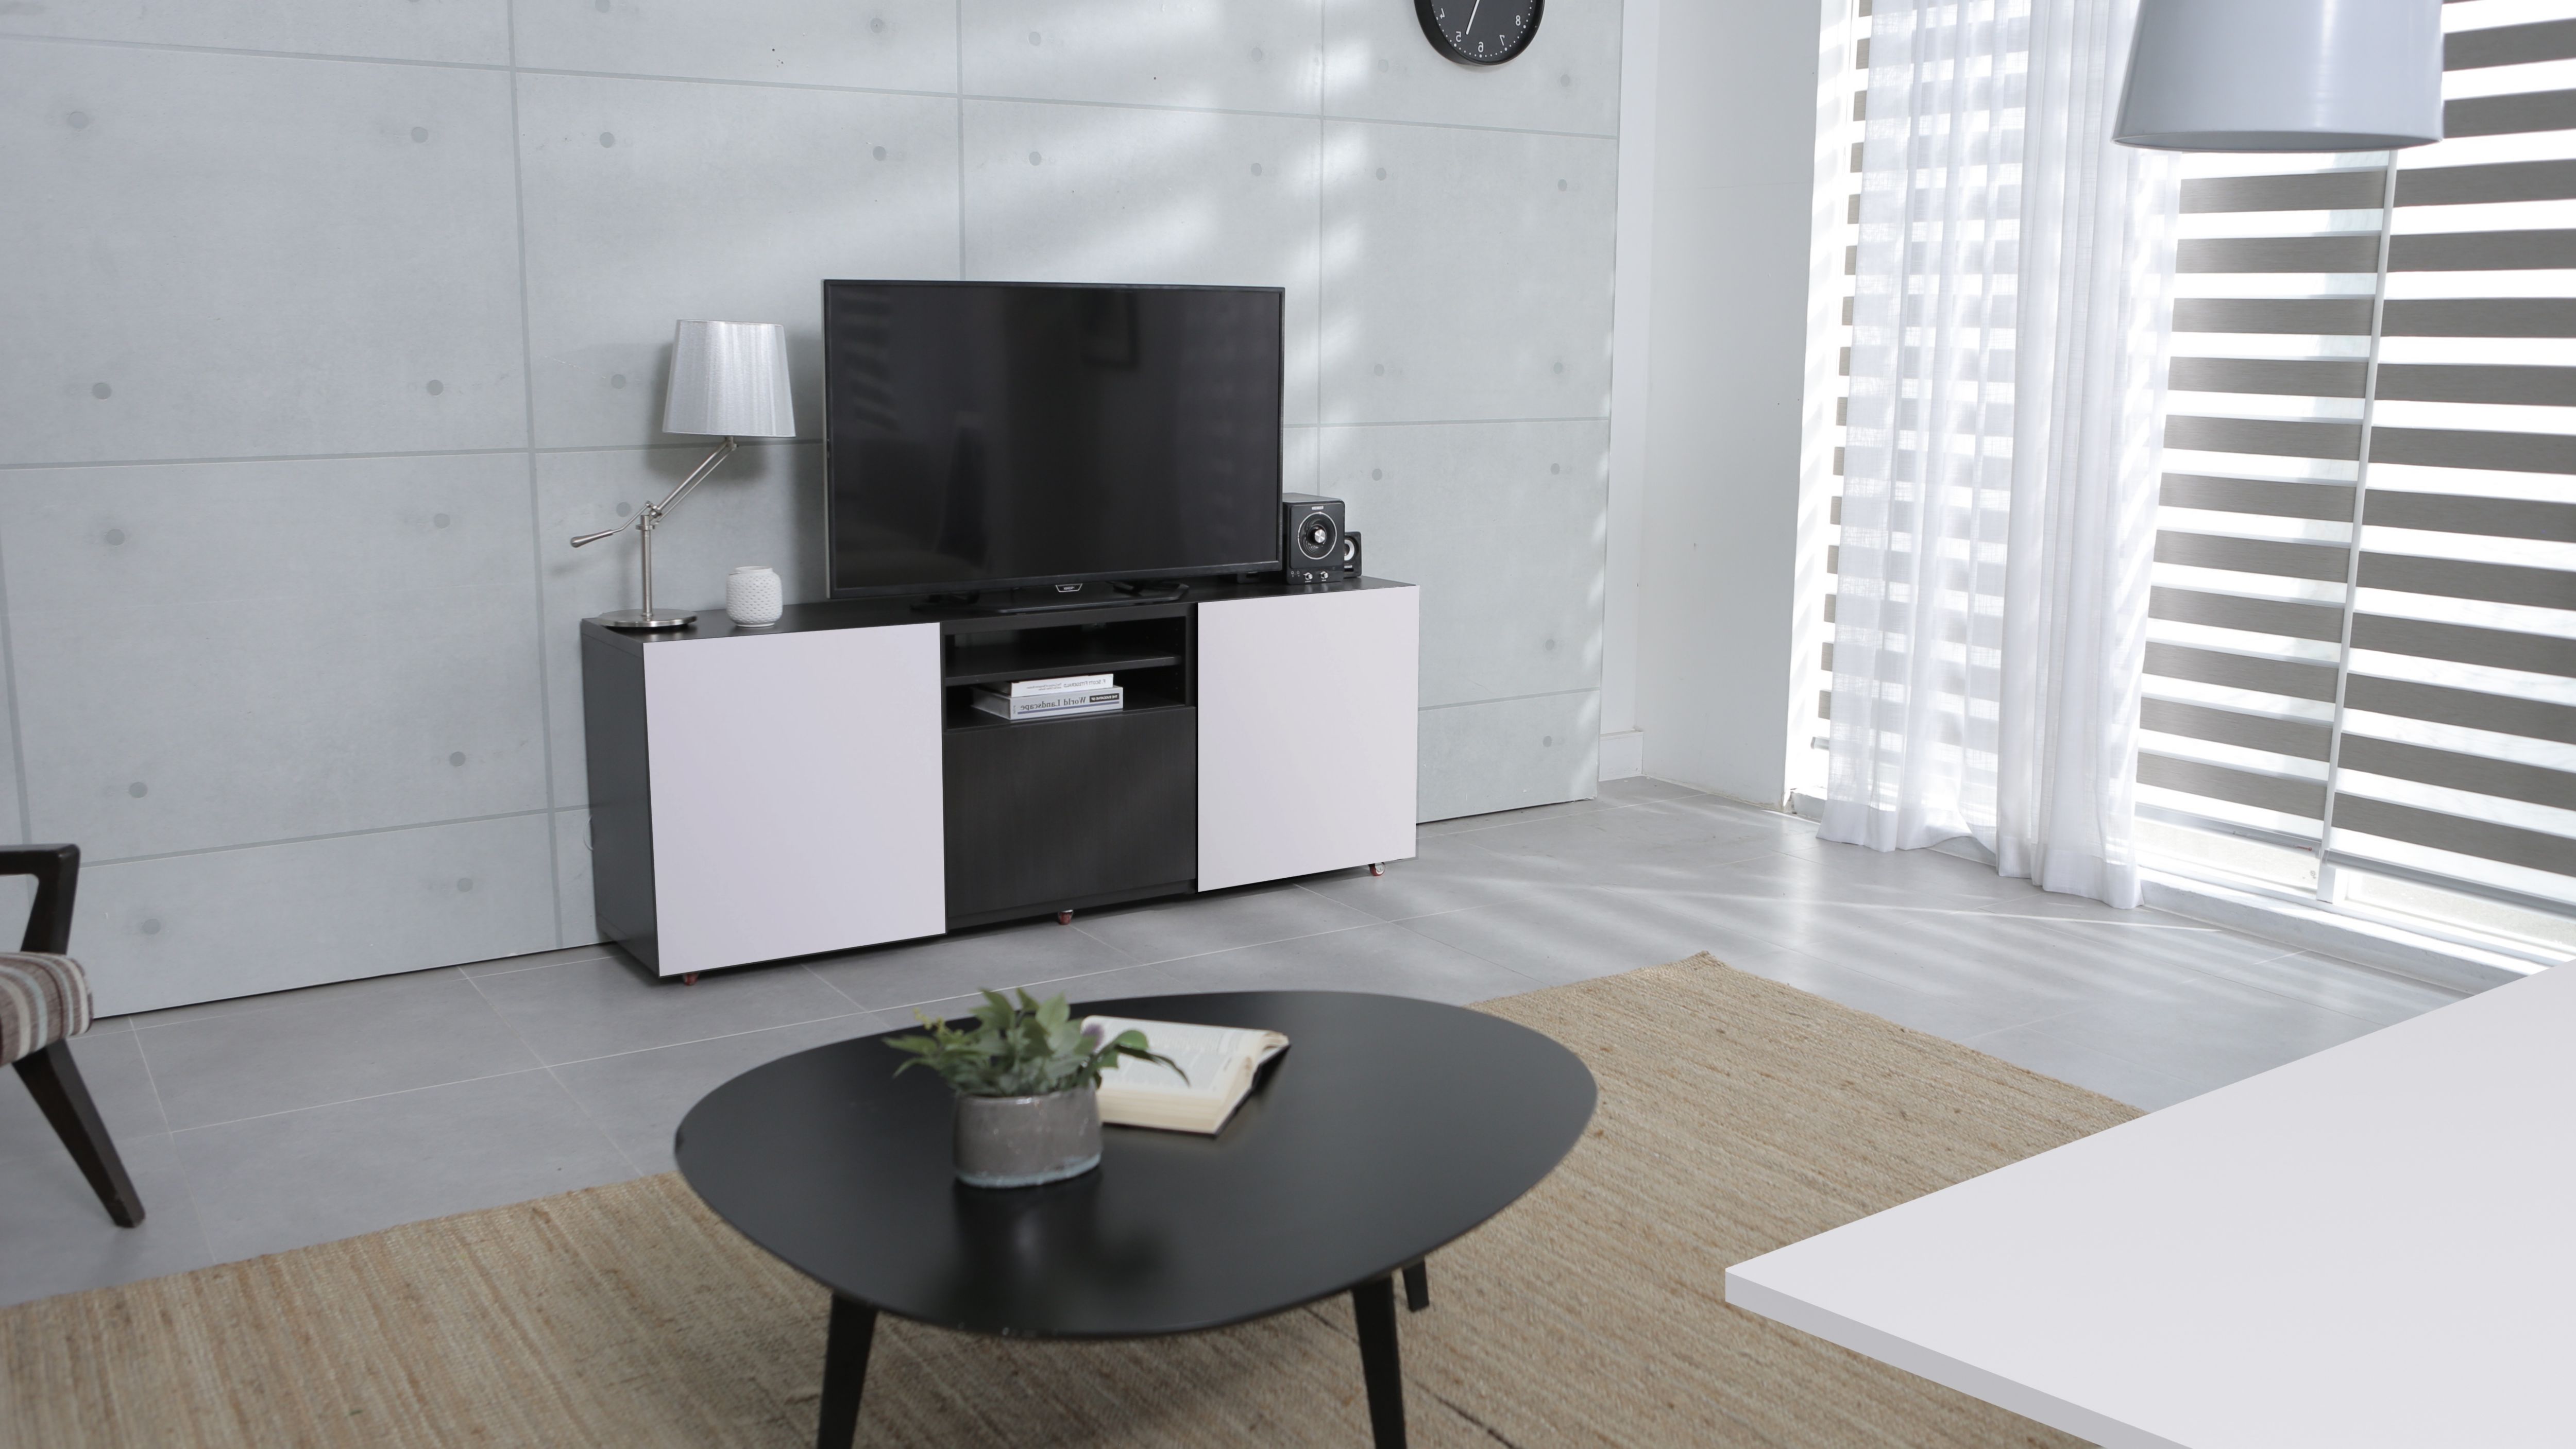 White Square edge Melamine-faced chipboard (MFC) Furniture board, (L)2.5m (W)300mm (T)16mm